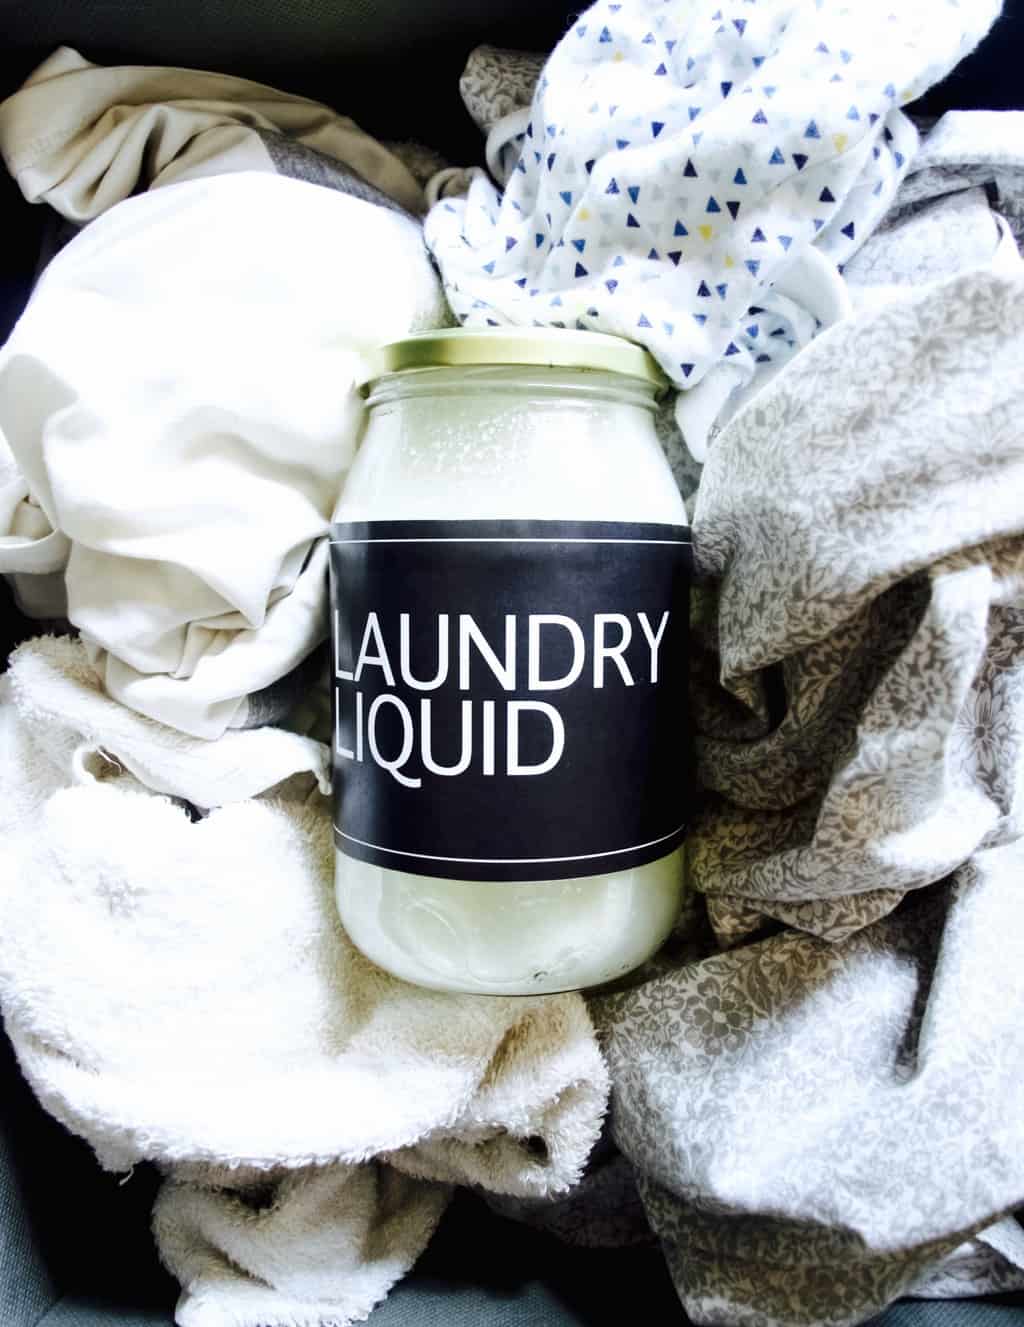 All natural laundry liquid recipe